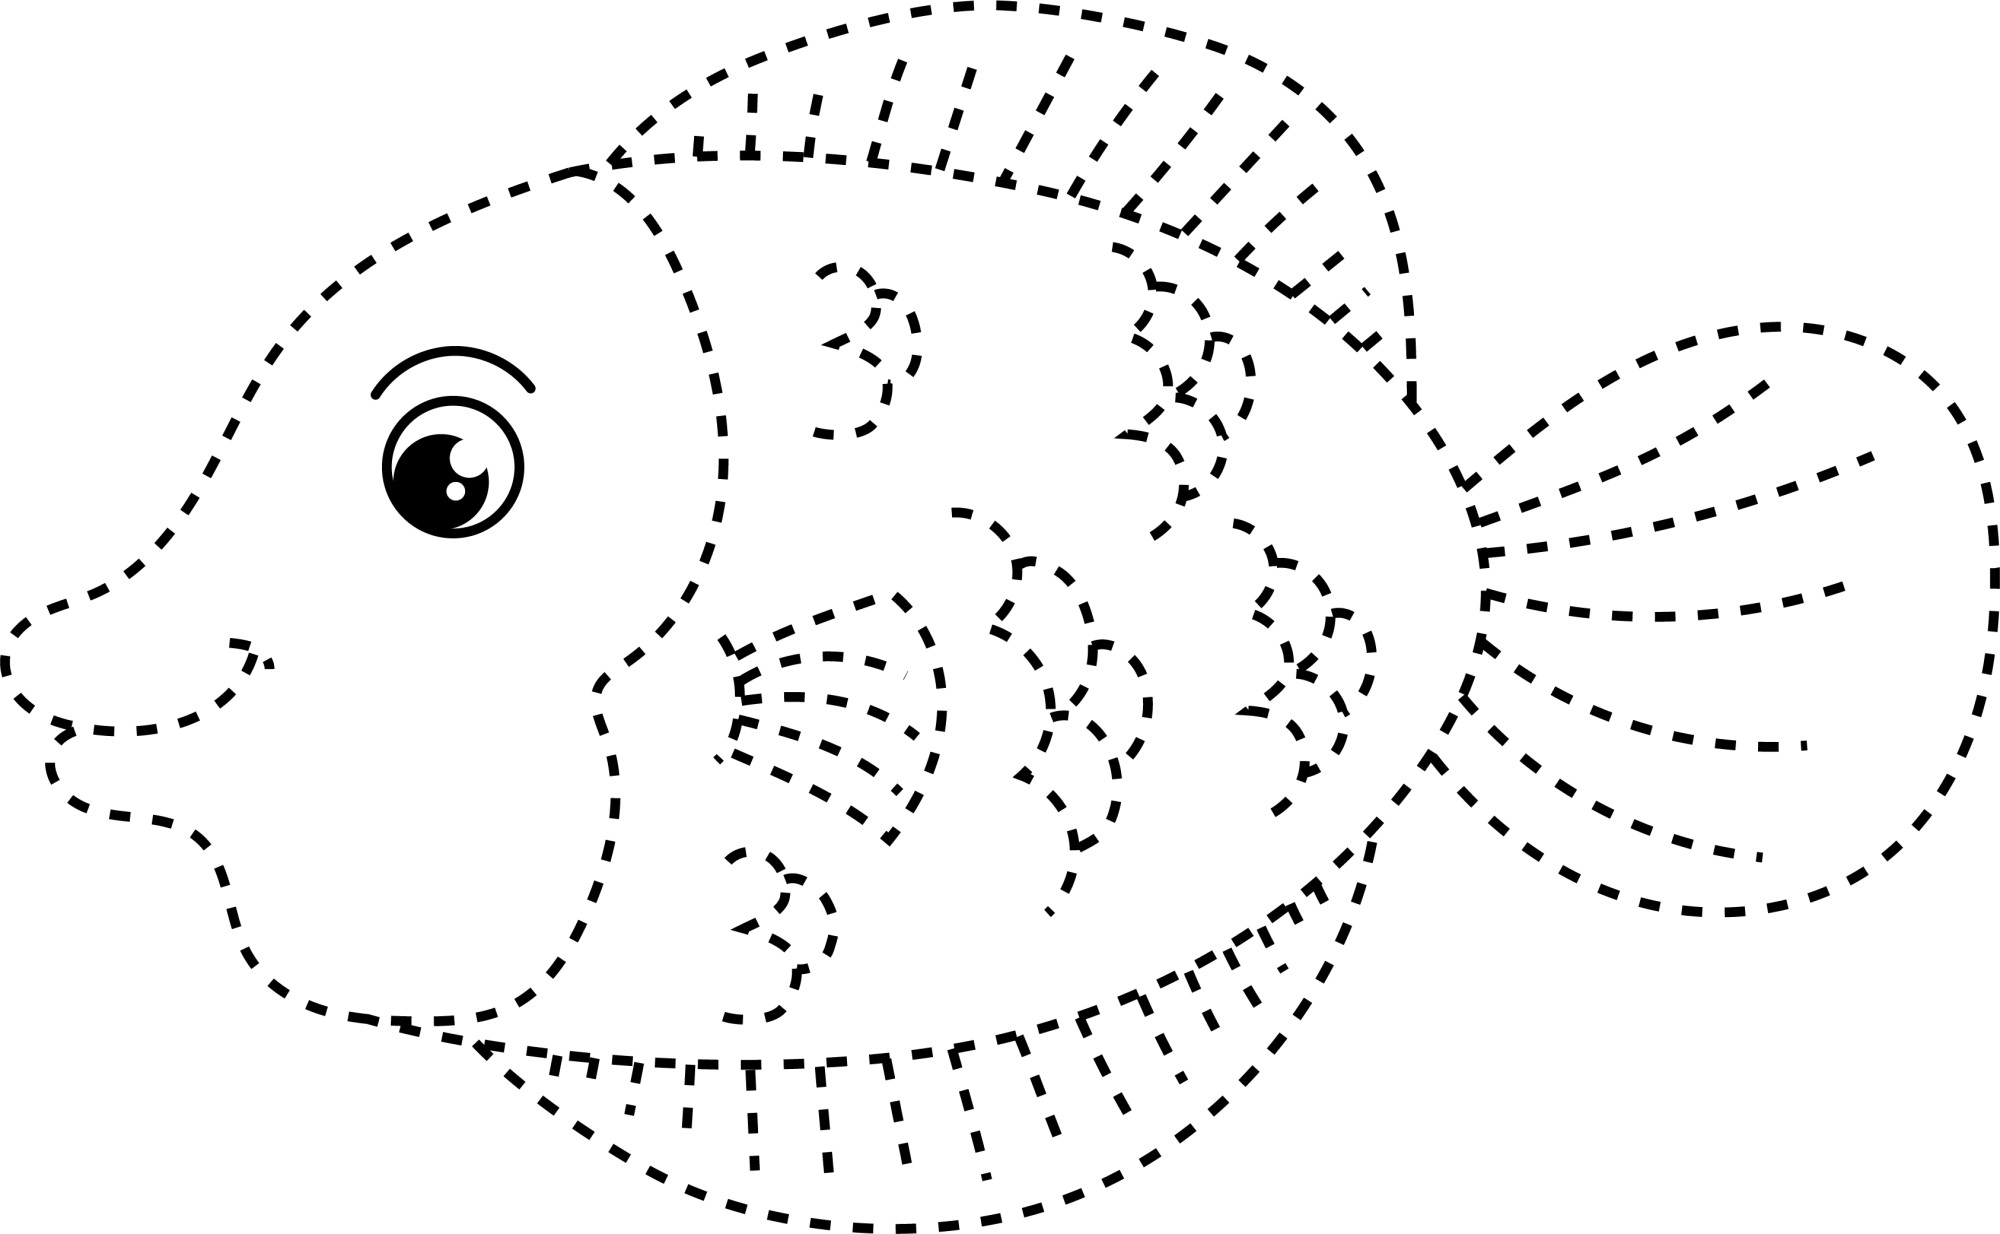 Раскраска для детей: мультяшная рыба по точкам